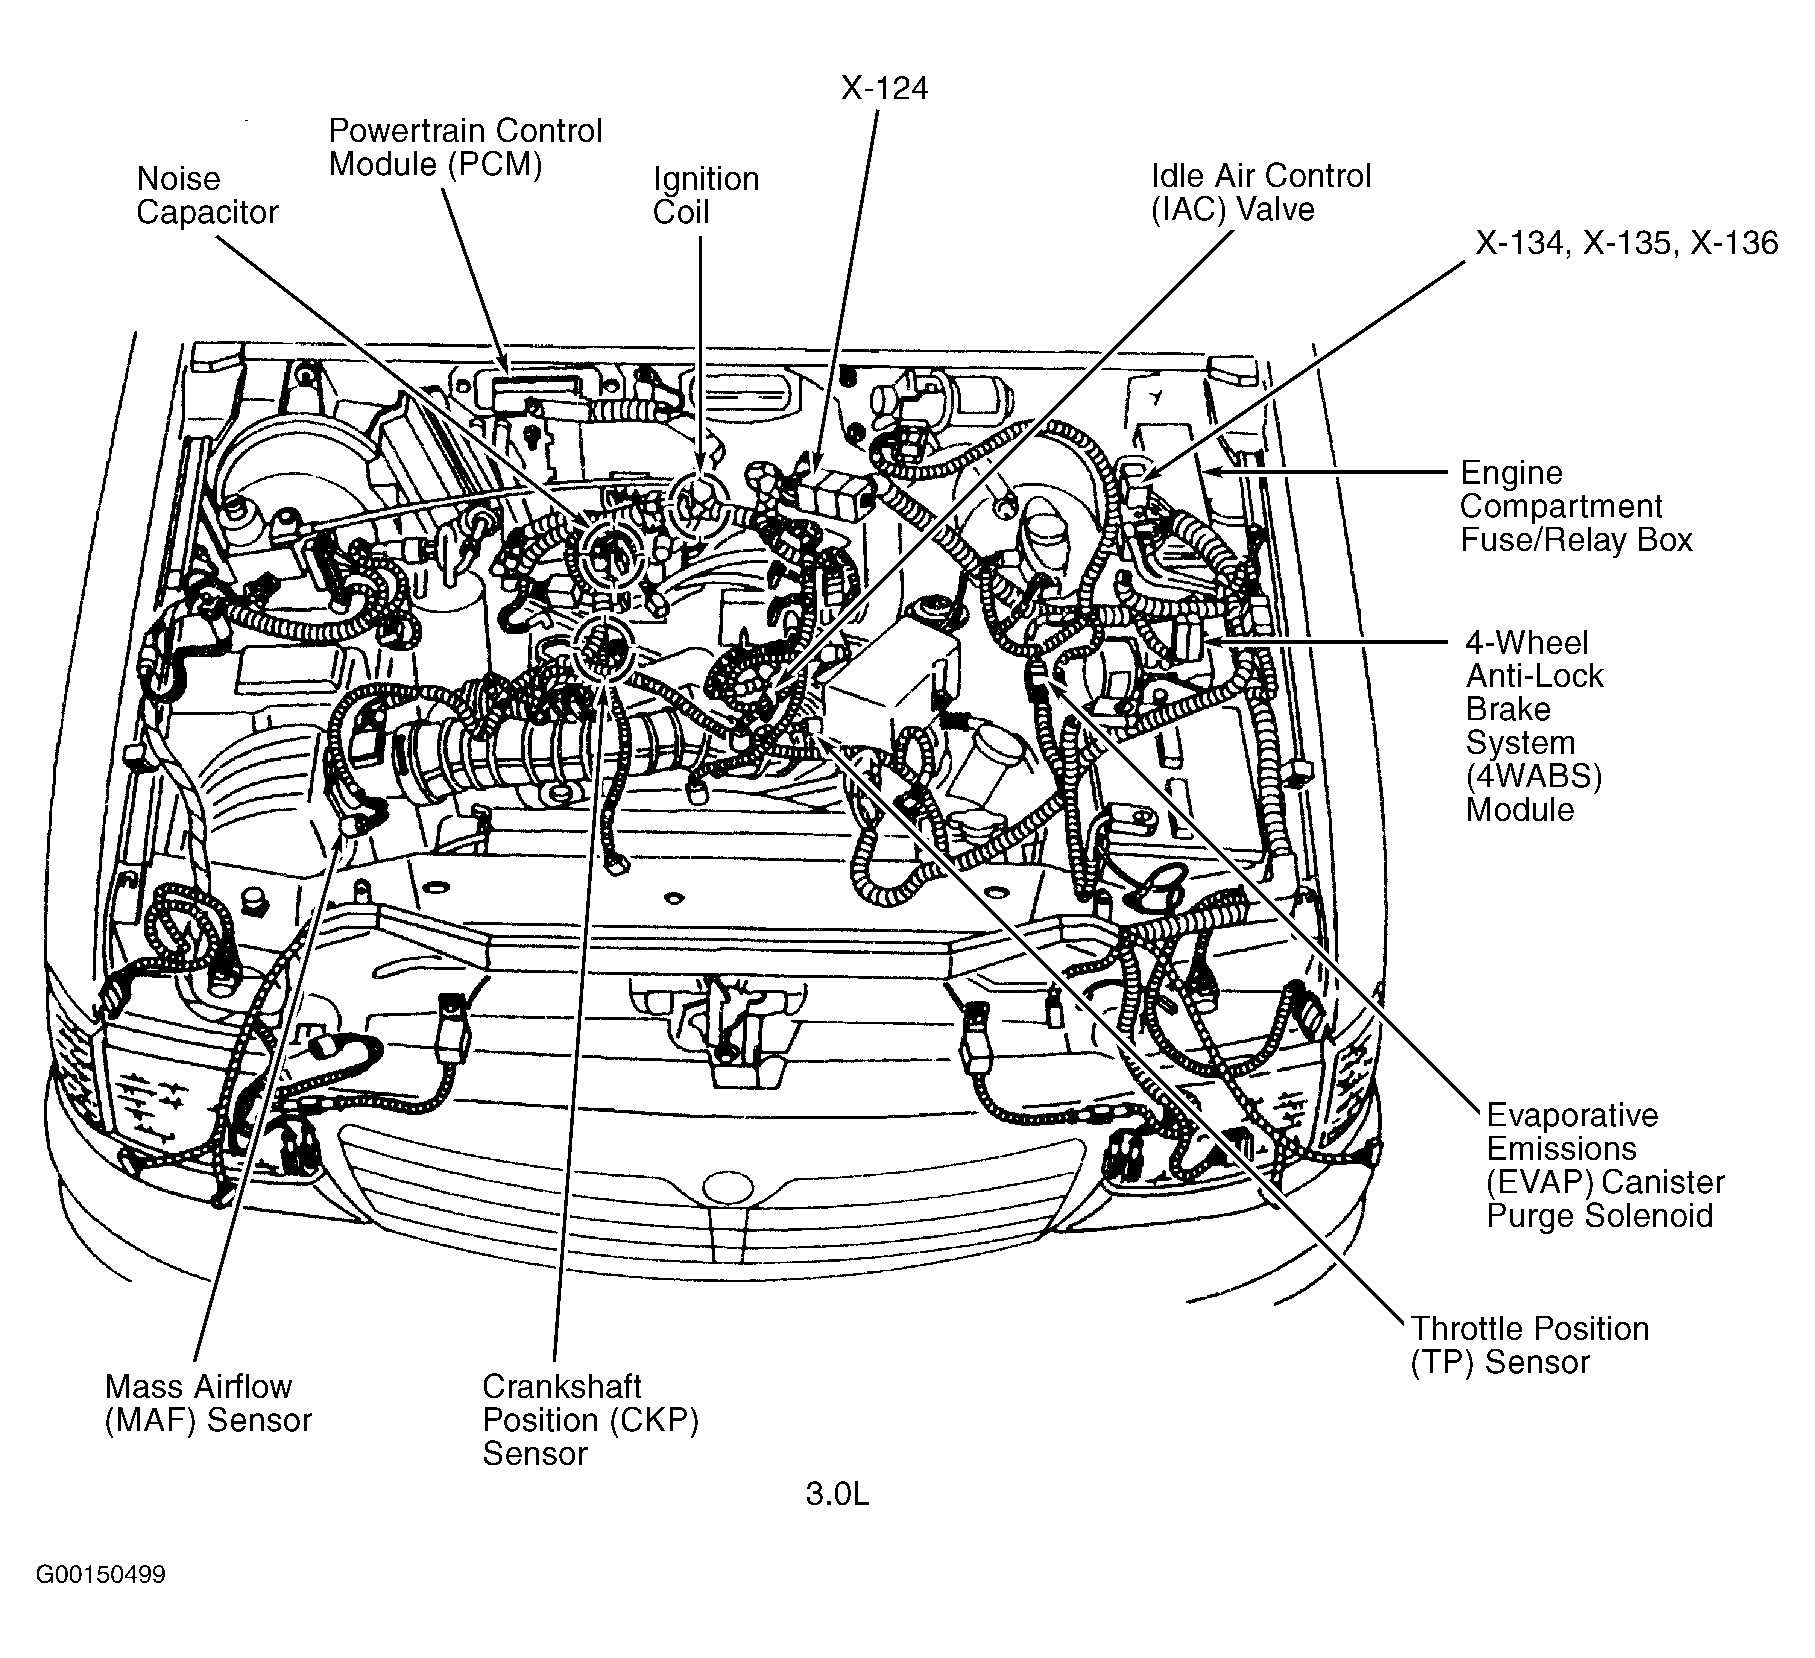 Parts Of Engine Diagram 2004 Mazda Rx8 Engine Diagram Mazda Wiring Diagrams Instructions Of Parts Of Engine Diagram